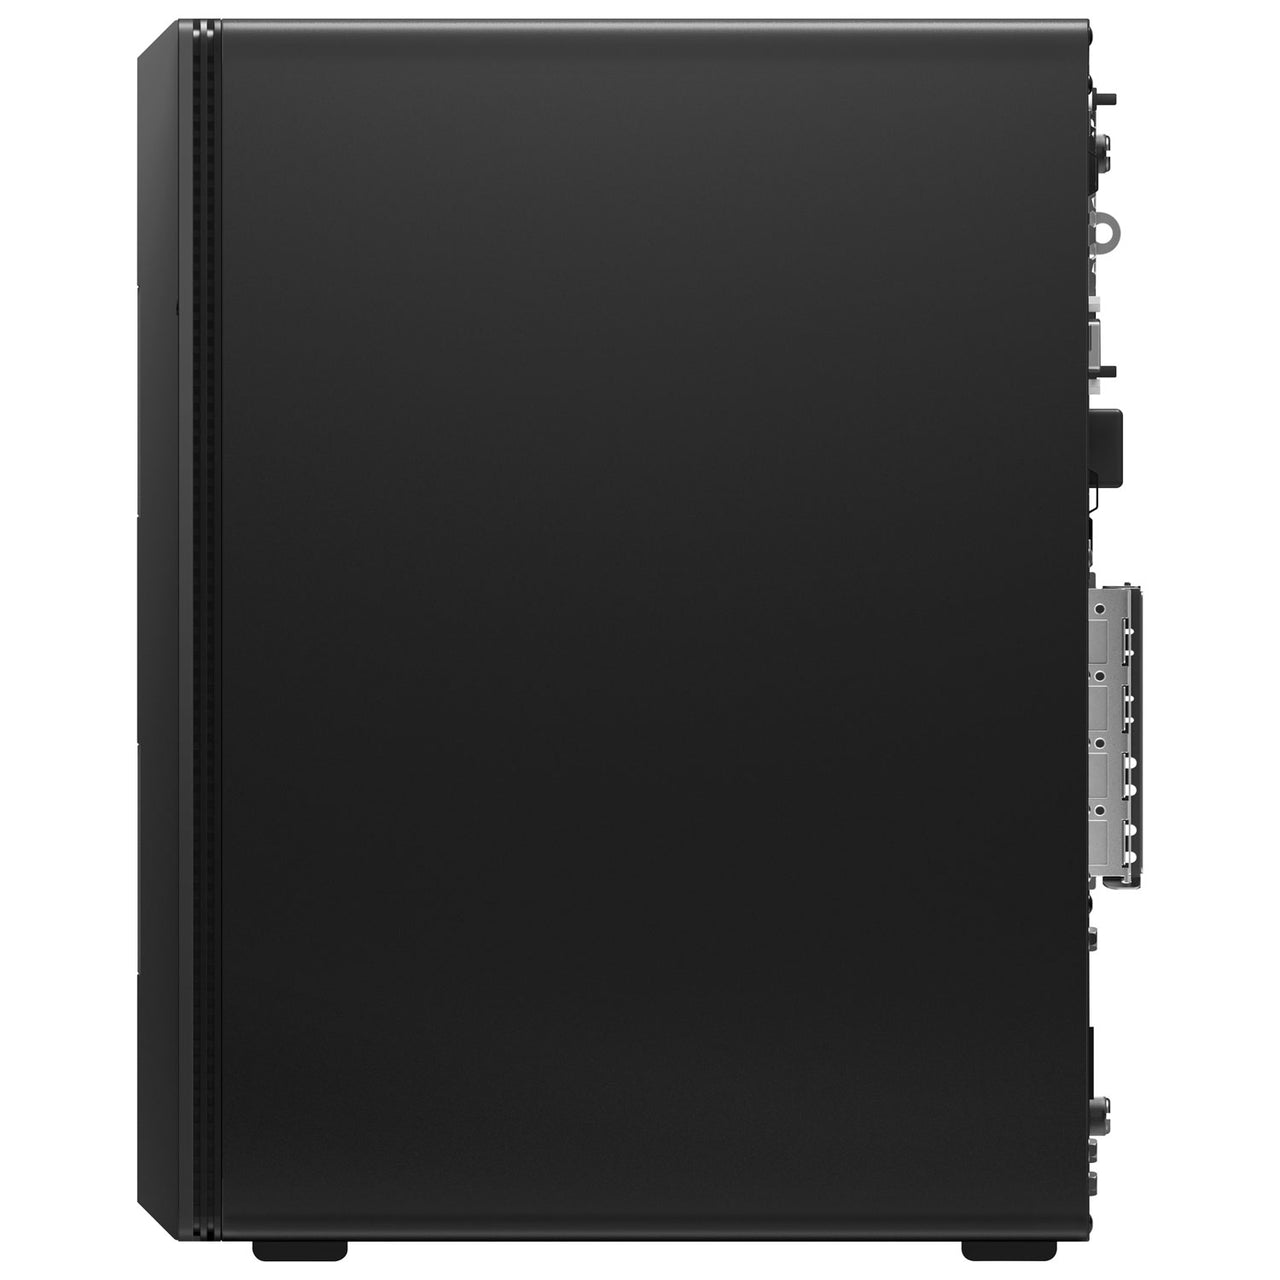 Lenovo IdeaCentre Gaming 5i Desktop PC (Intel Core i7-12700/1TB HDD/512GB SSD/16GB RAM/RTX 3060) -Eng